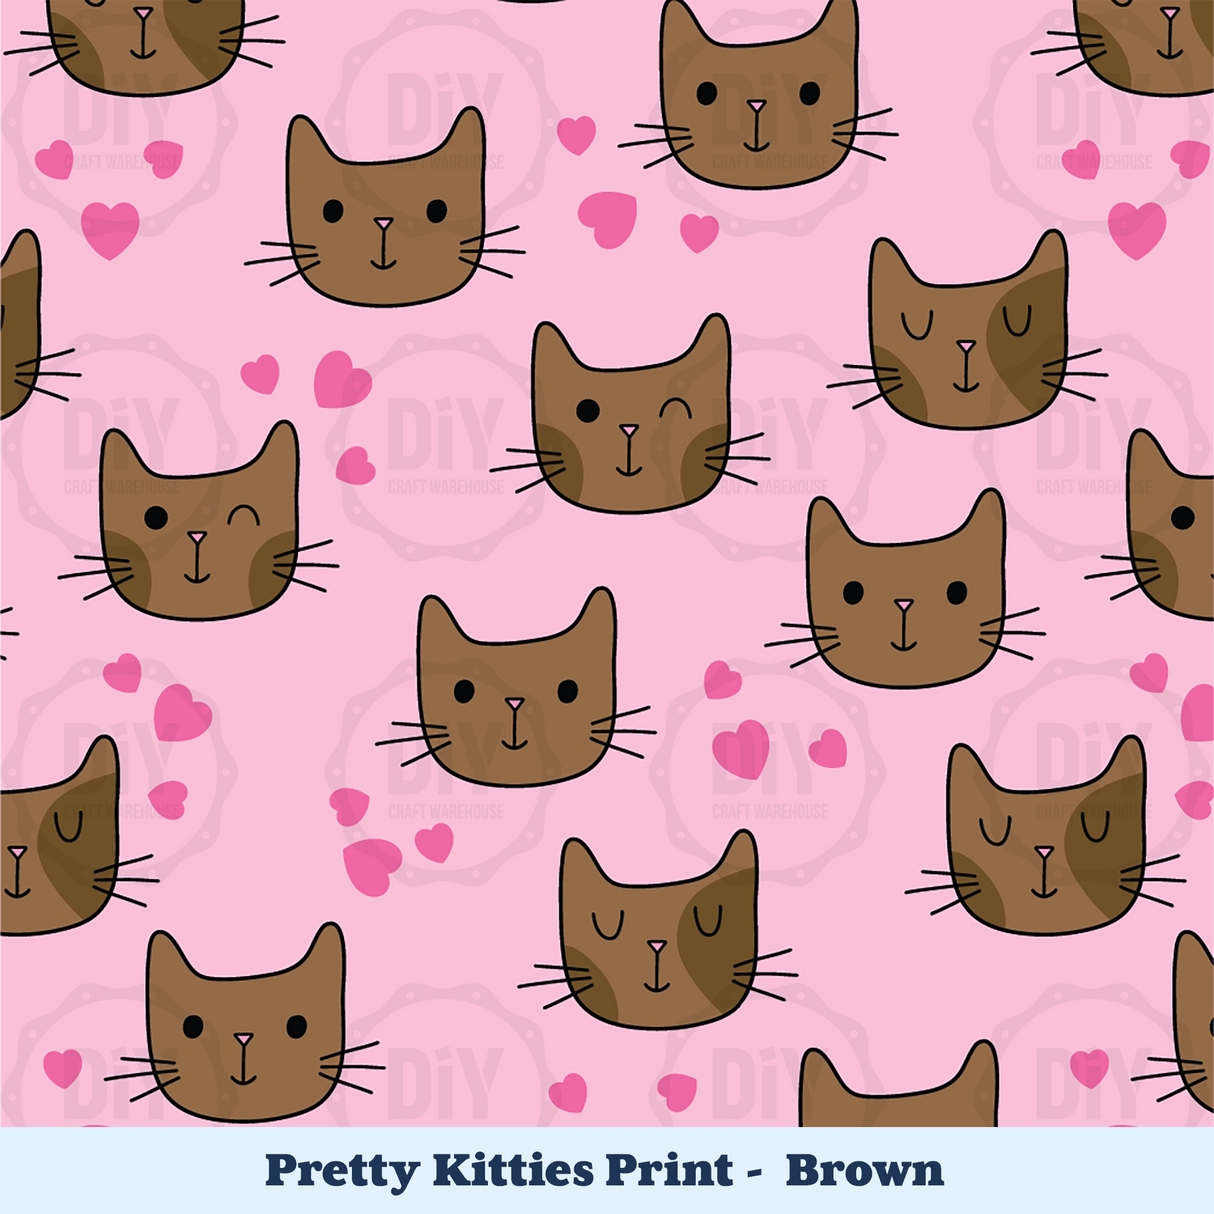 Pretty Kitties Sublimation Transfer - Brown